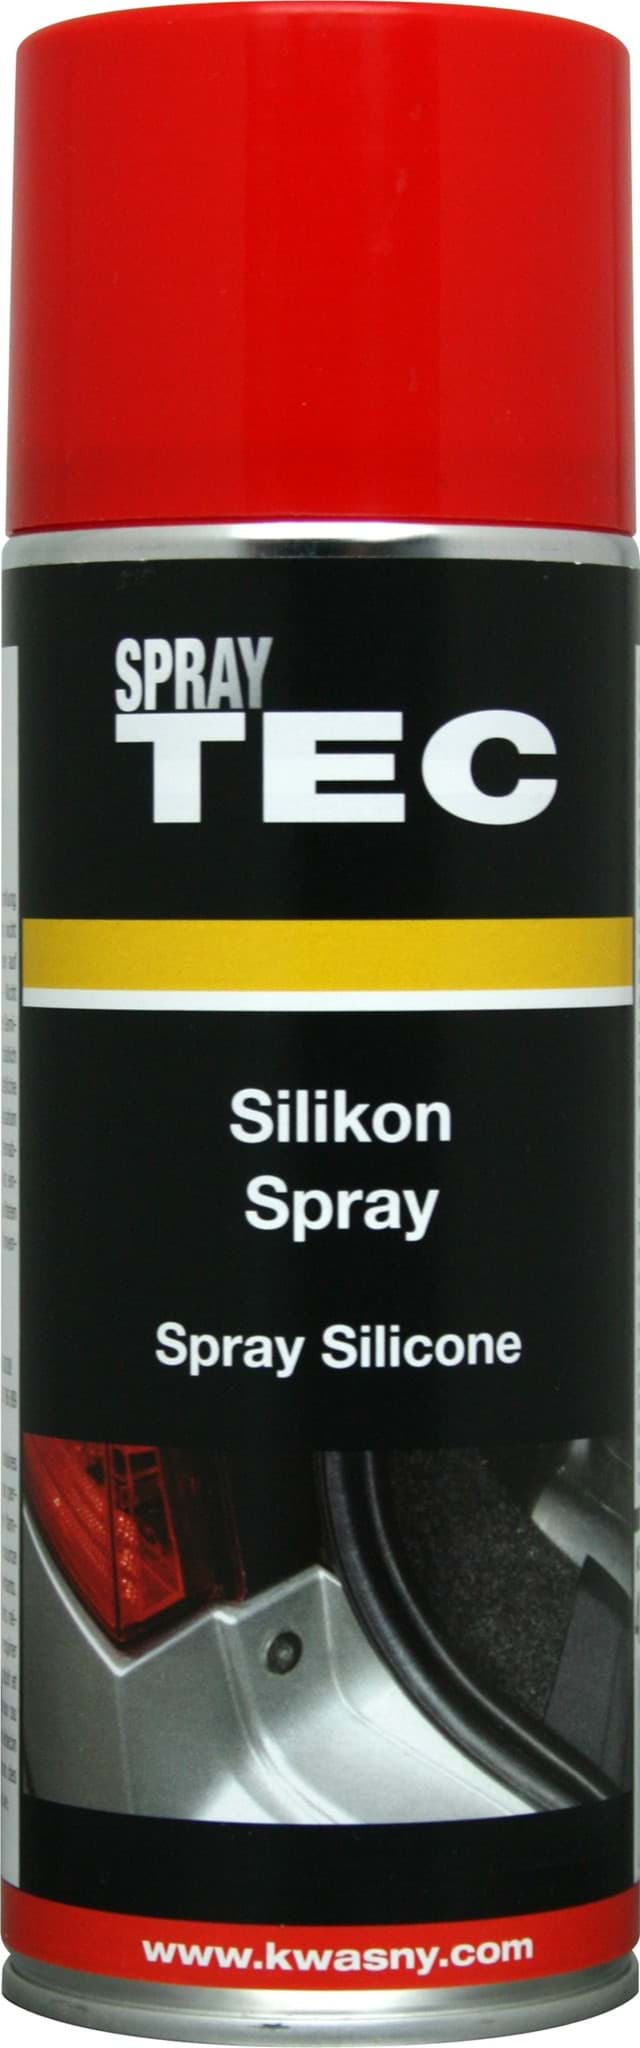 Изображение Silikon-Spray 400ml SprayTEC 235001